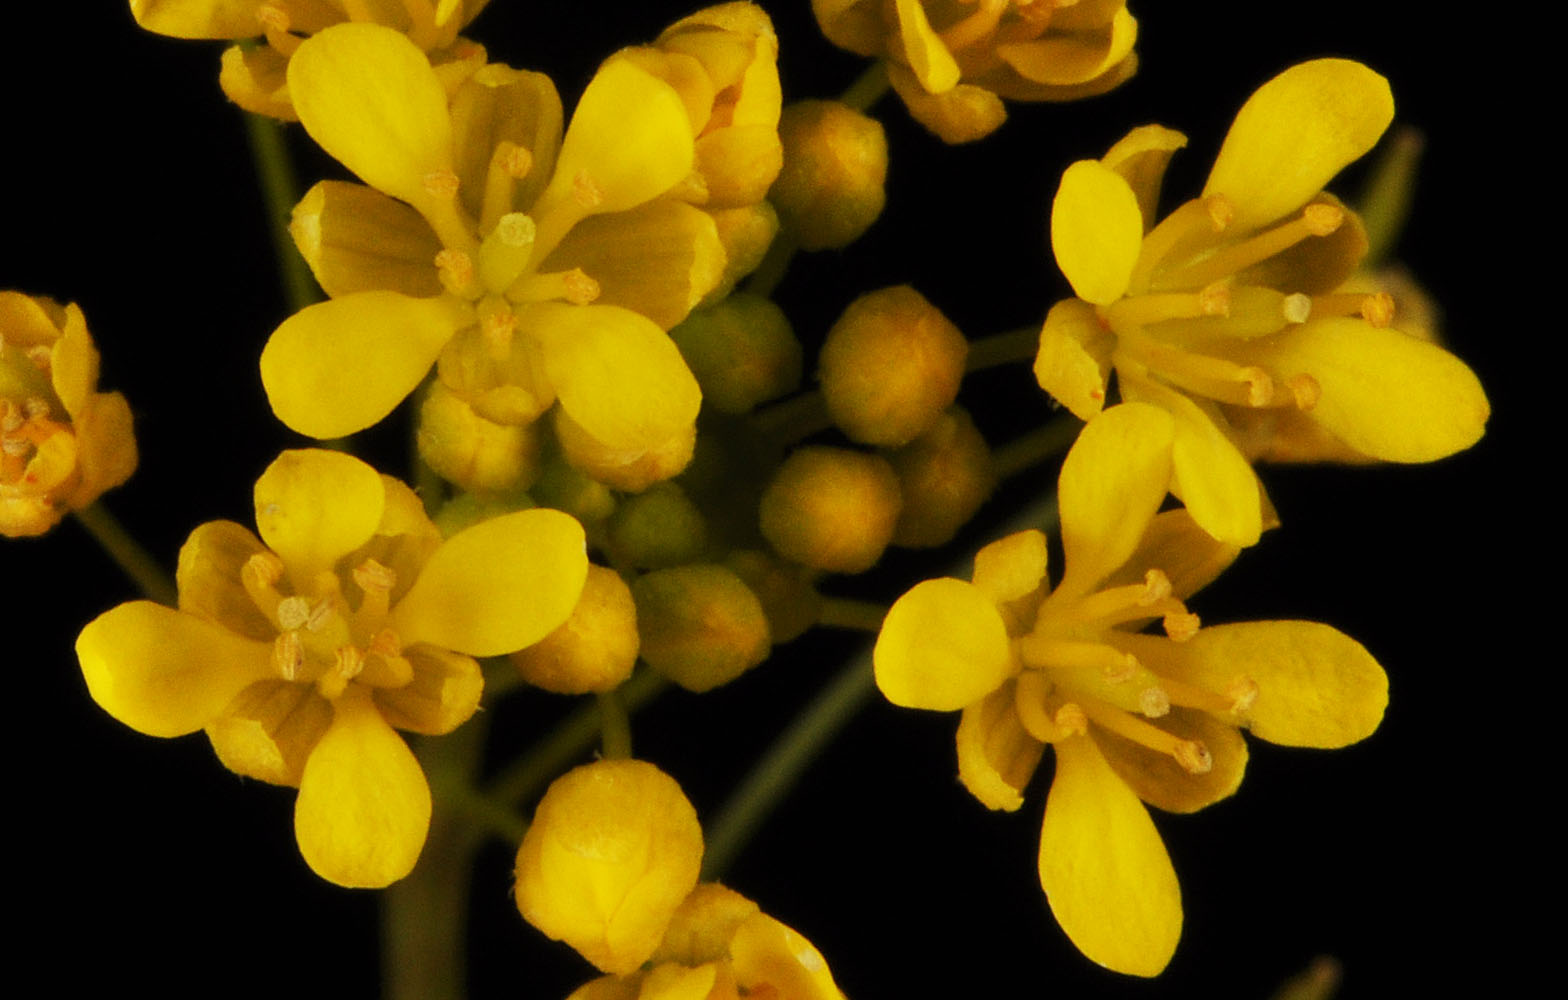 Flora of Eastern Washington Image: Descurainia incisa